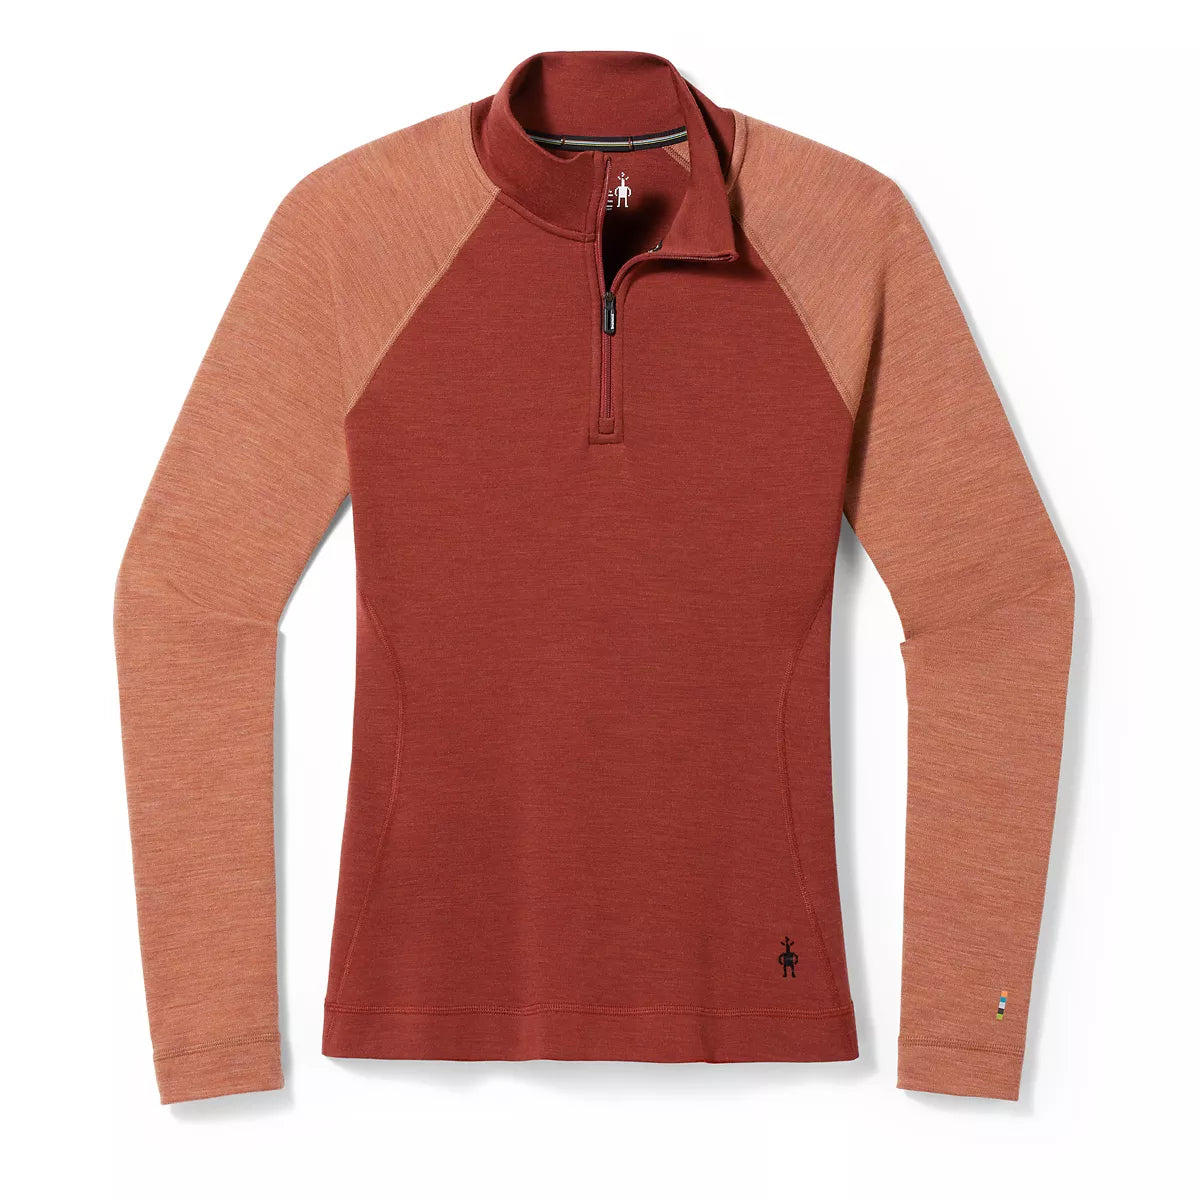 Stay dry, warm and comfortable in Smartwool's Merino Sport Fleece